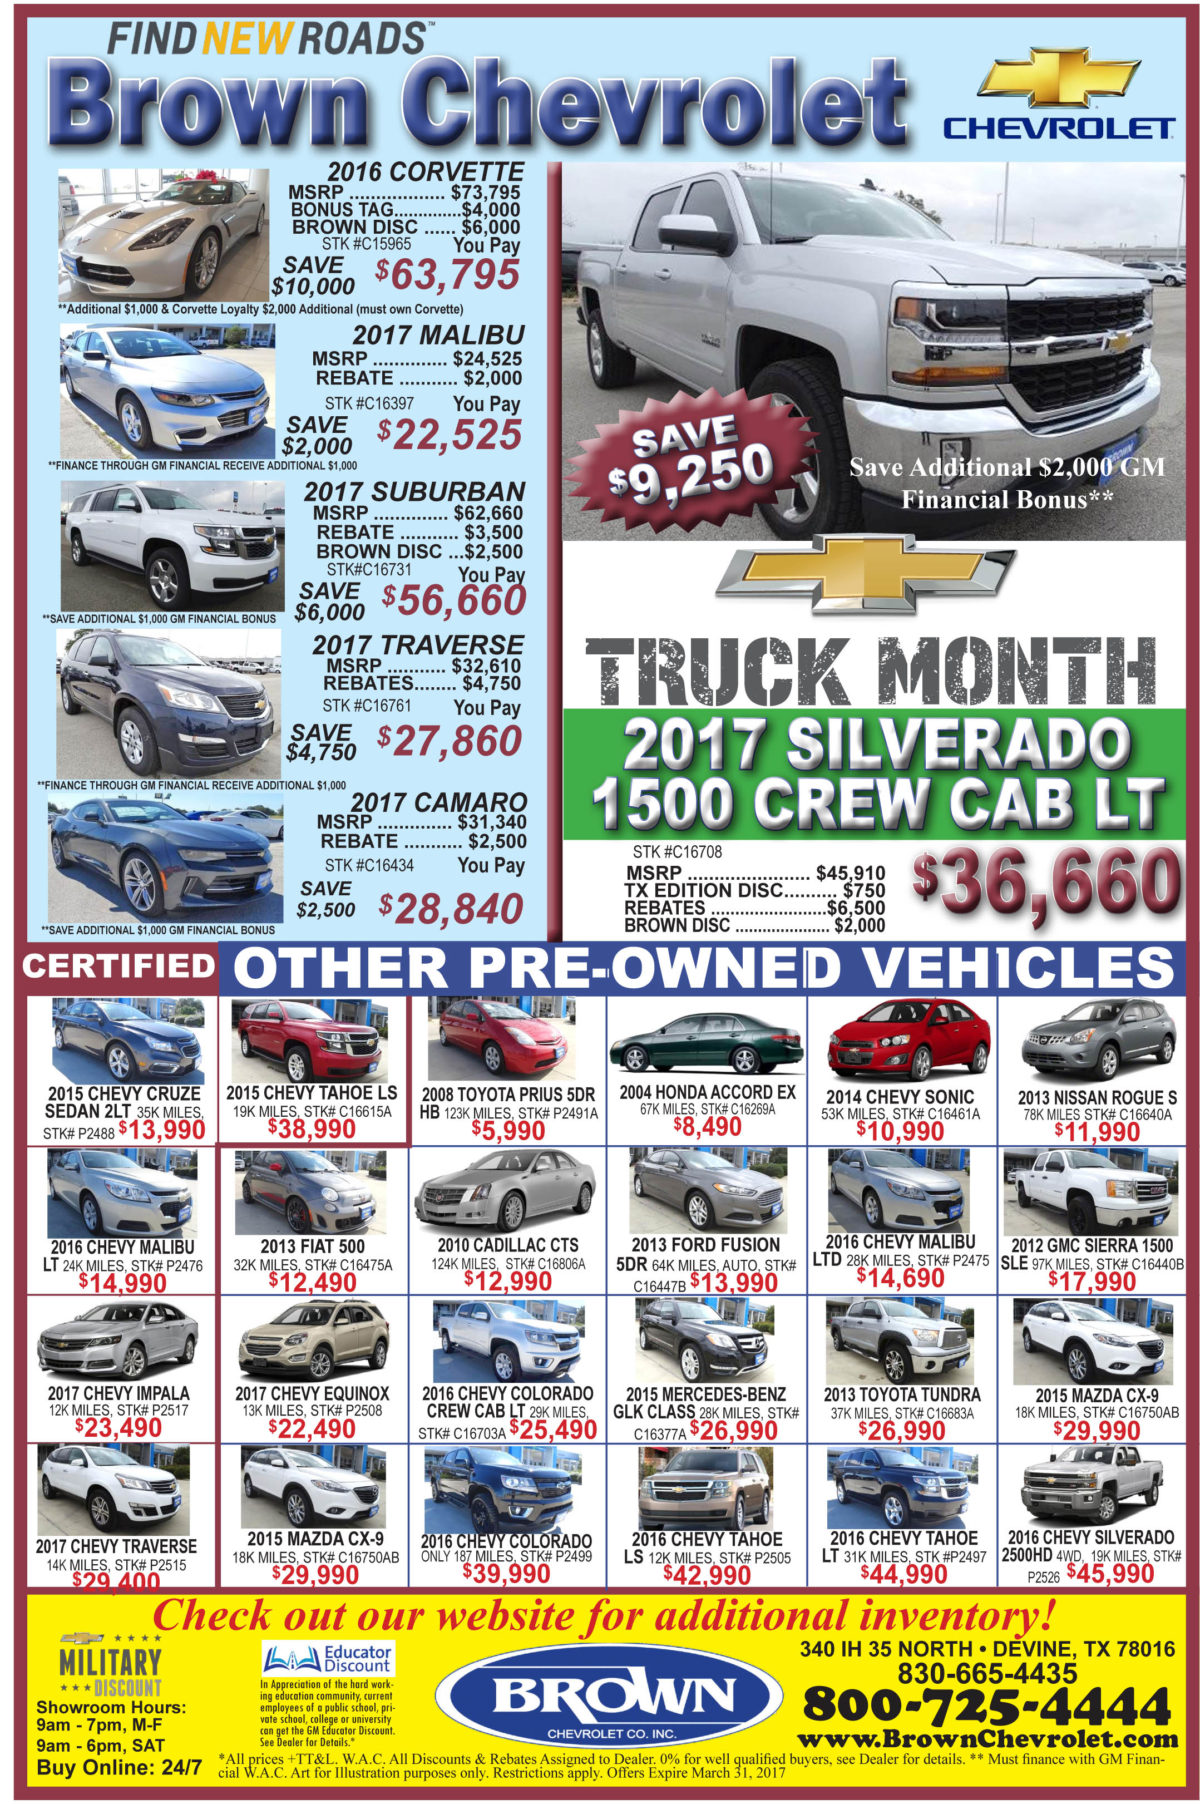 Brown Chevrolet weekly deals